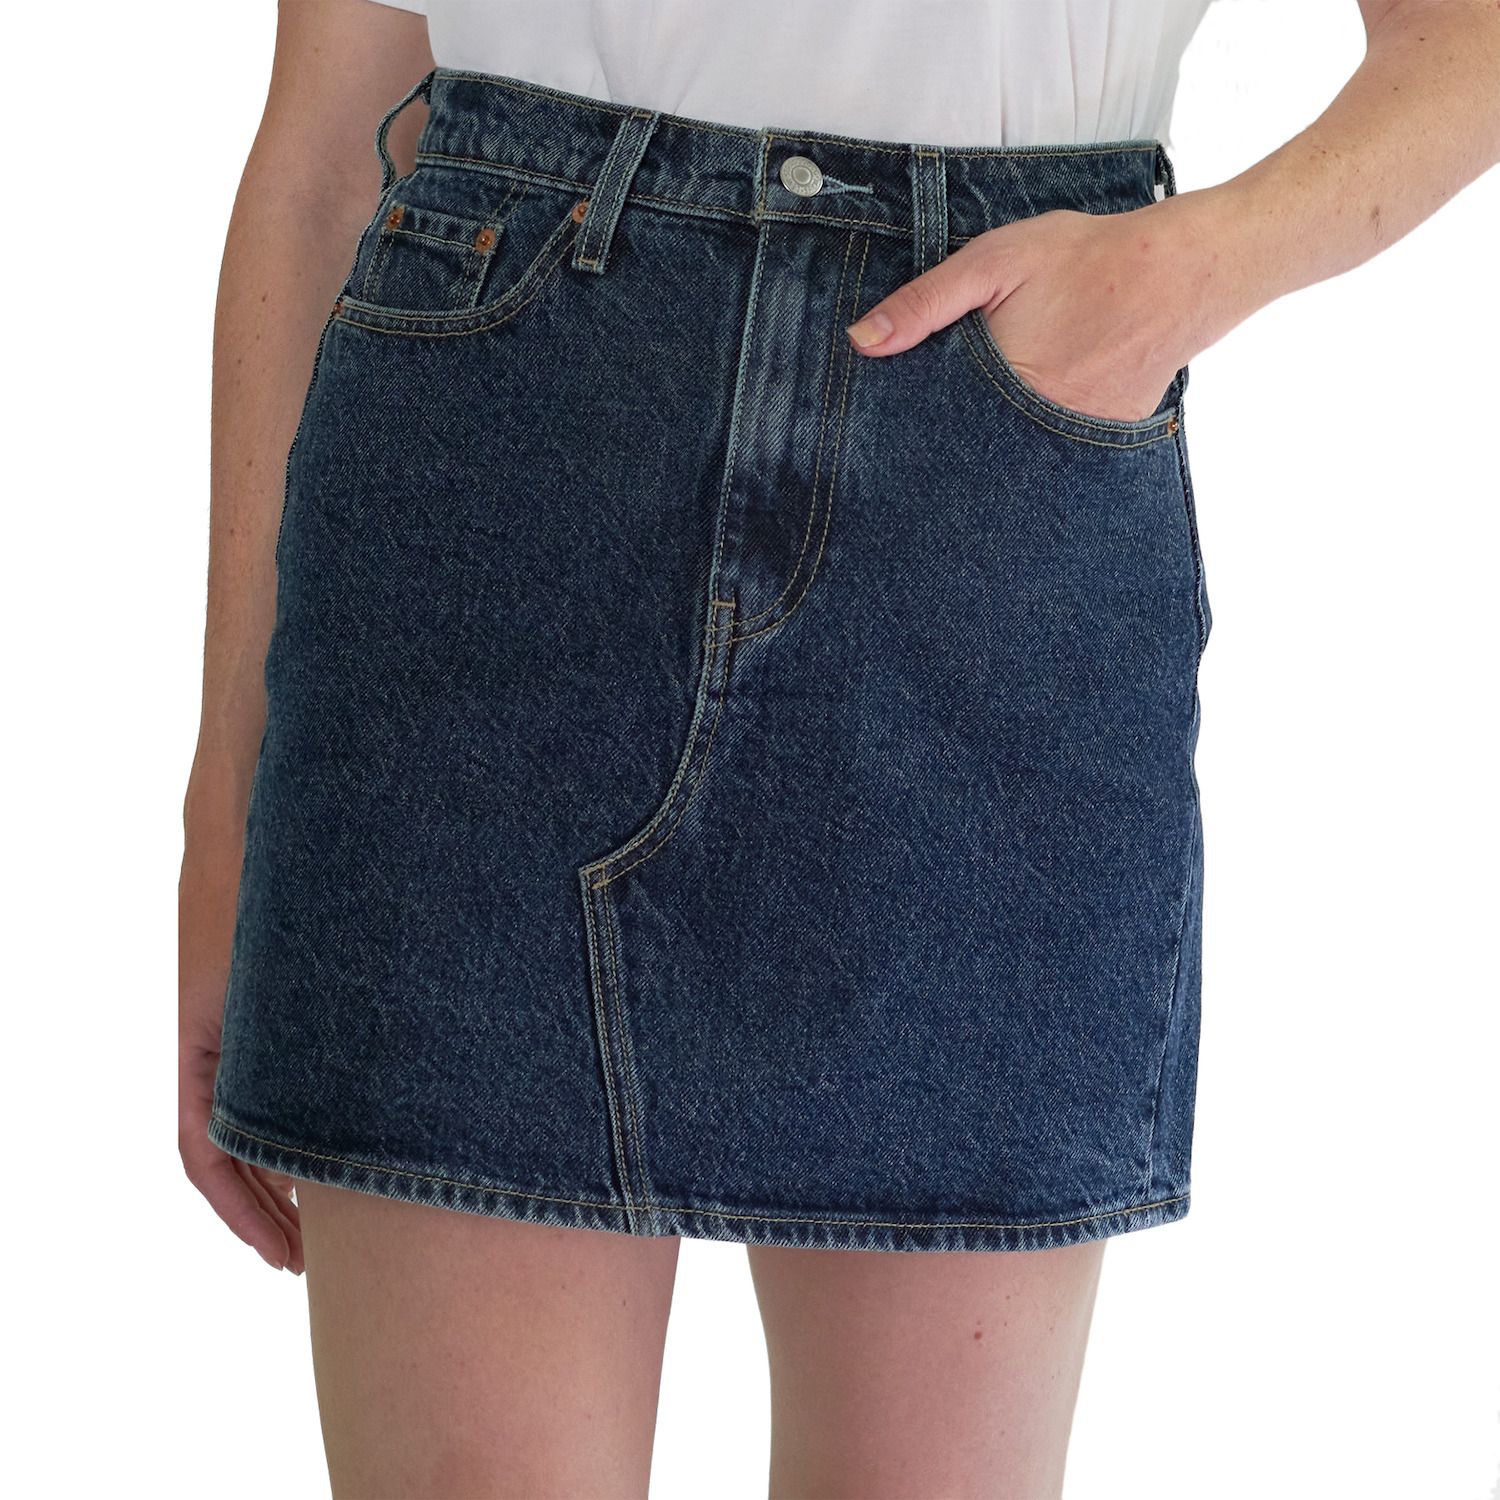 levi's jean skirts